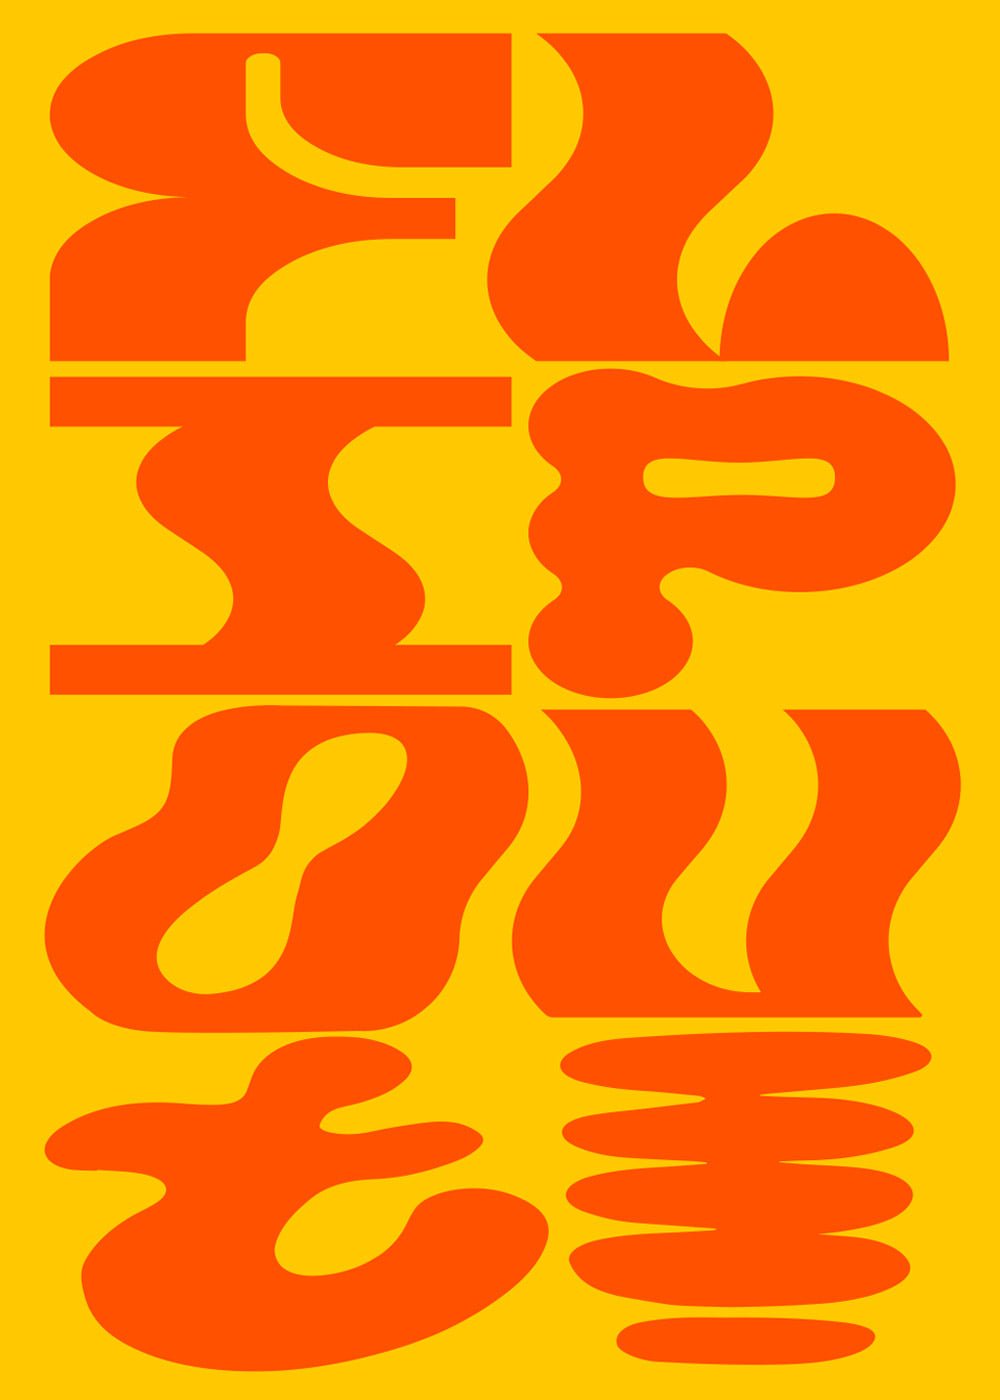 Flip Out Poster, typografisk poster i gult och orange.